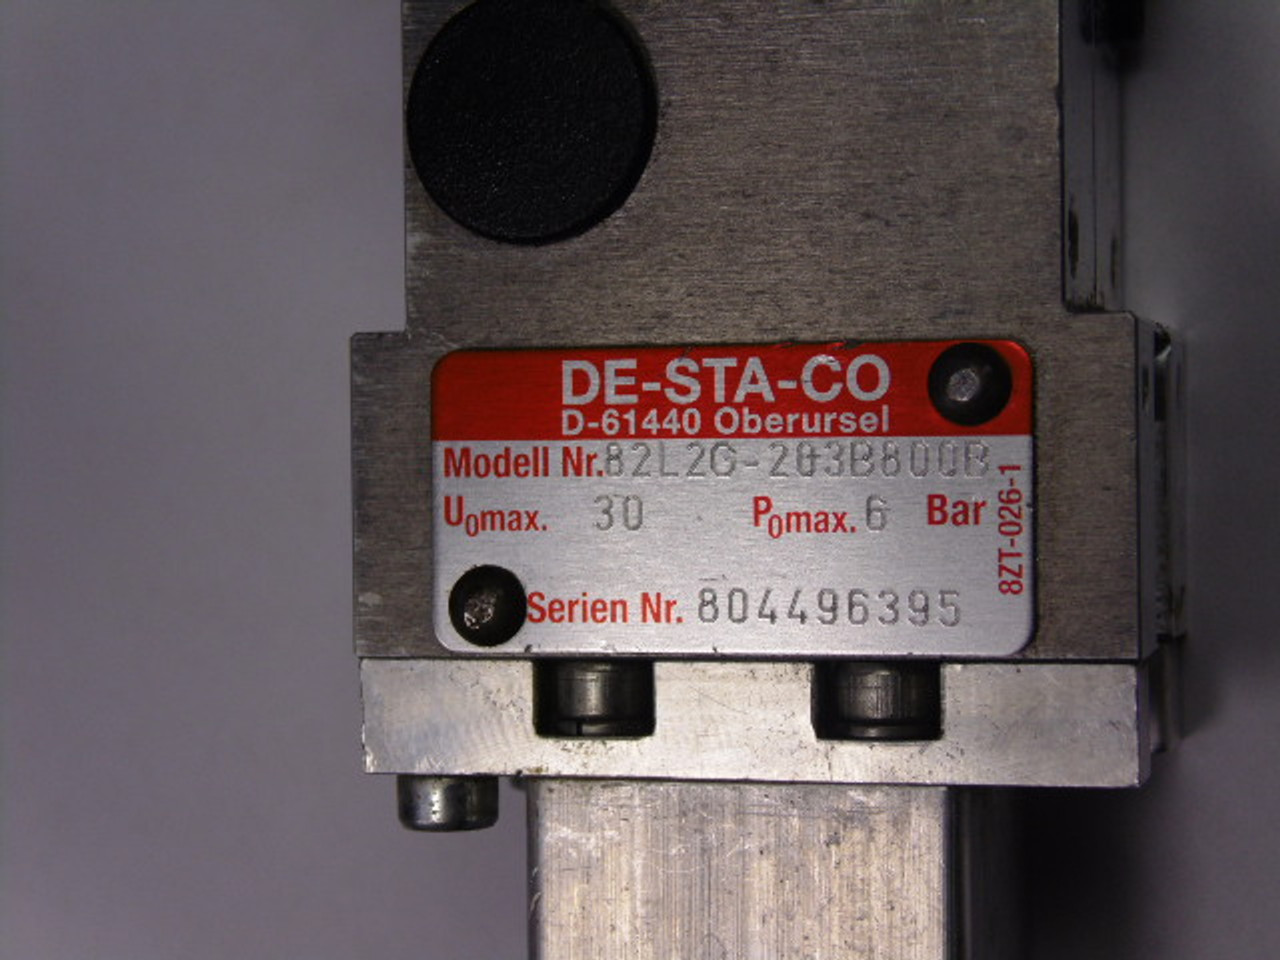 Destaco 82L2G-203B800B Pneumatic Power Clamp Compressor USED